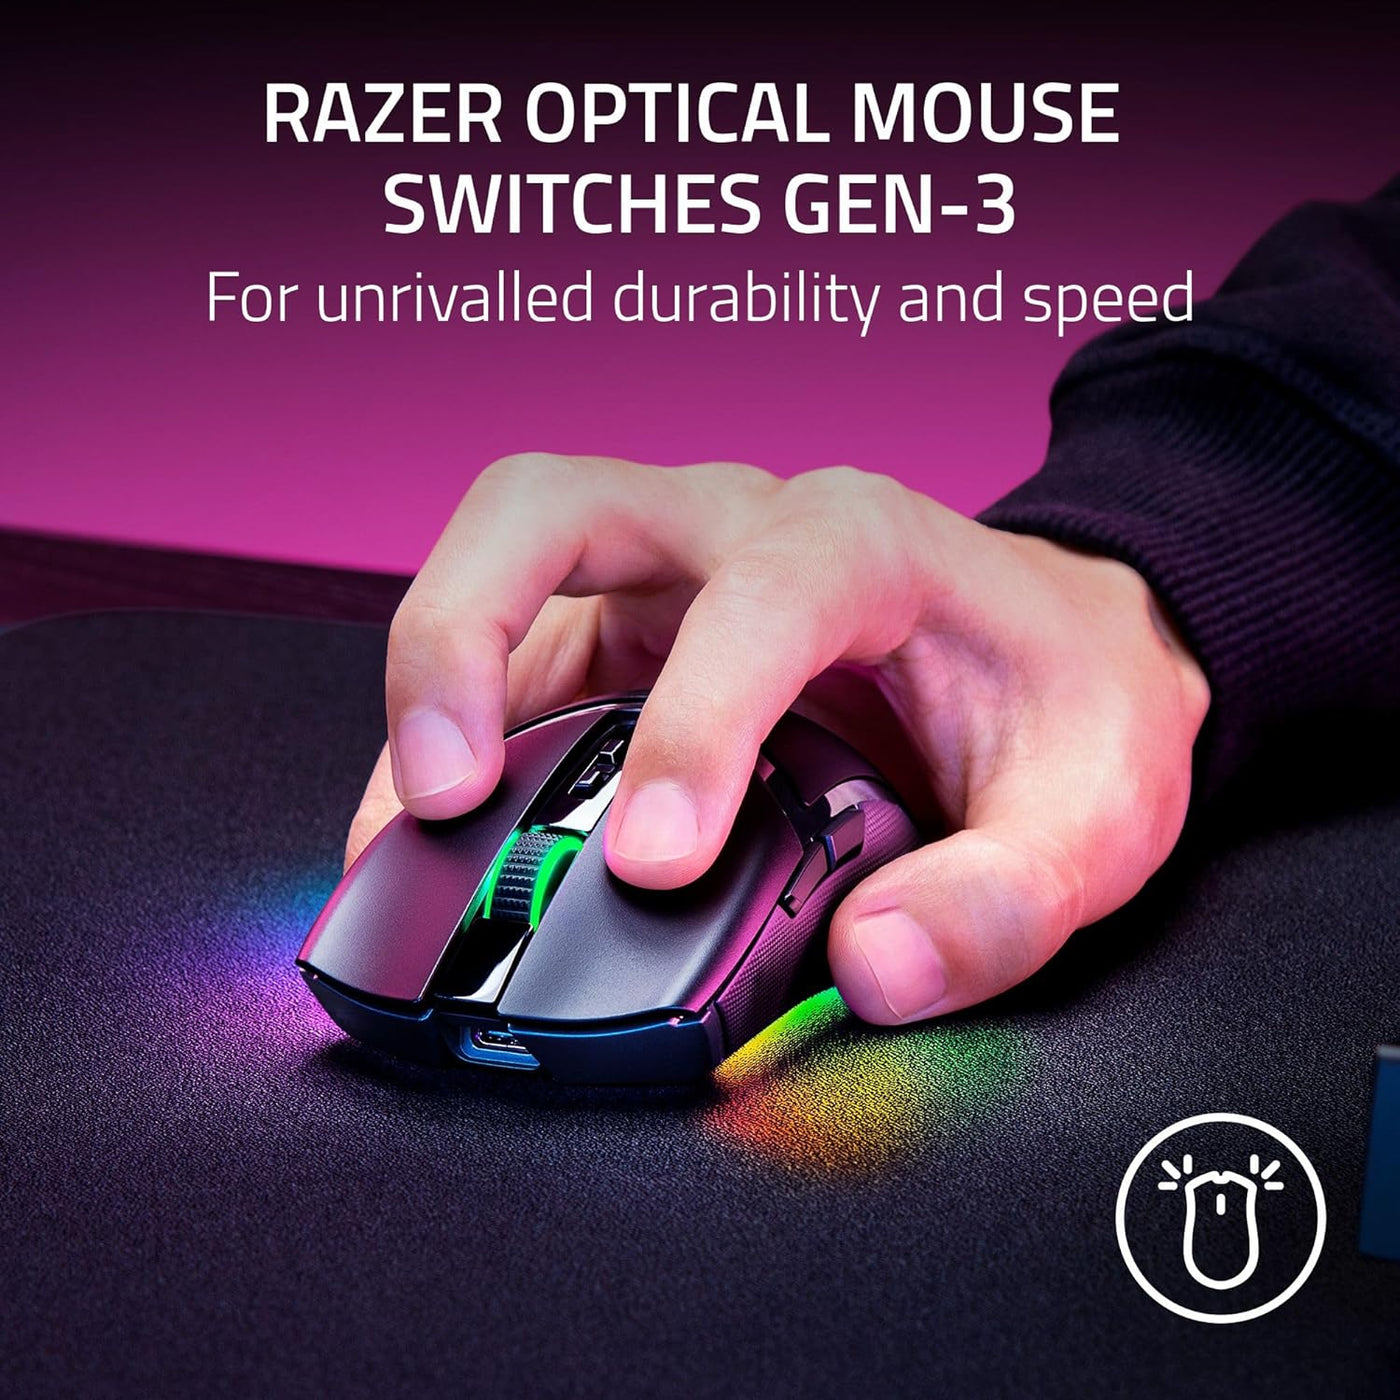 Mouse Razer cobra Pro 30k DPI MULTI-DISPOSITIVO 100H WIRELESS / BT / USB-C